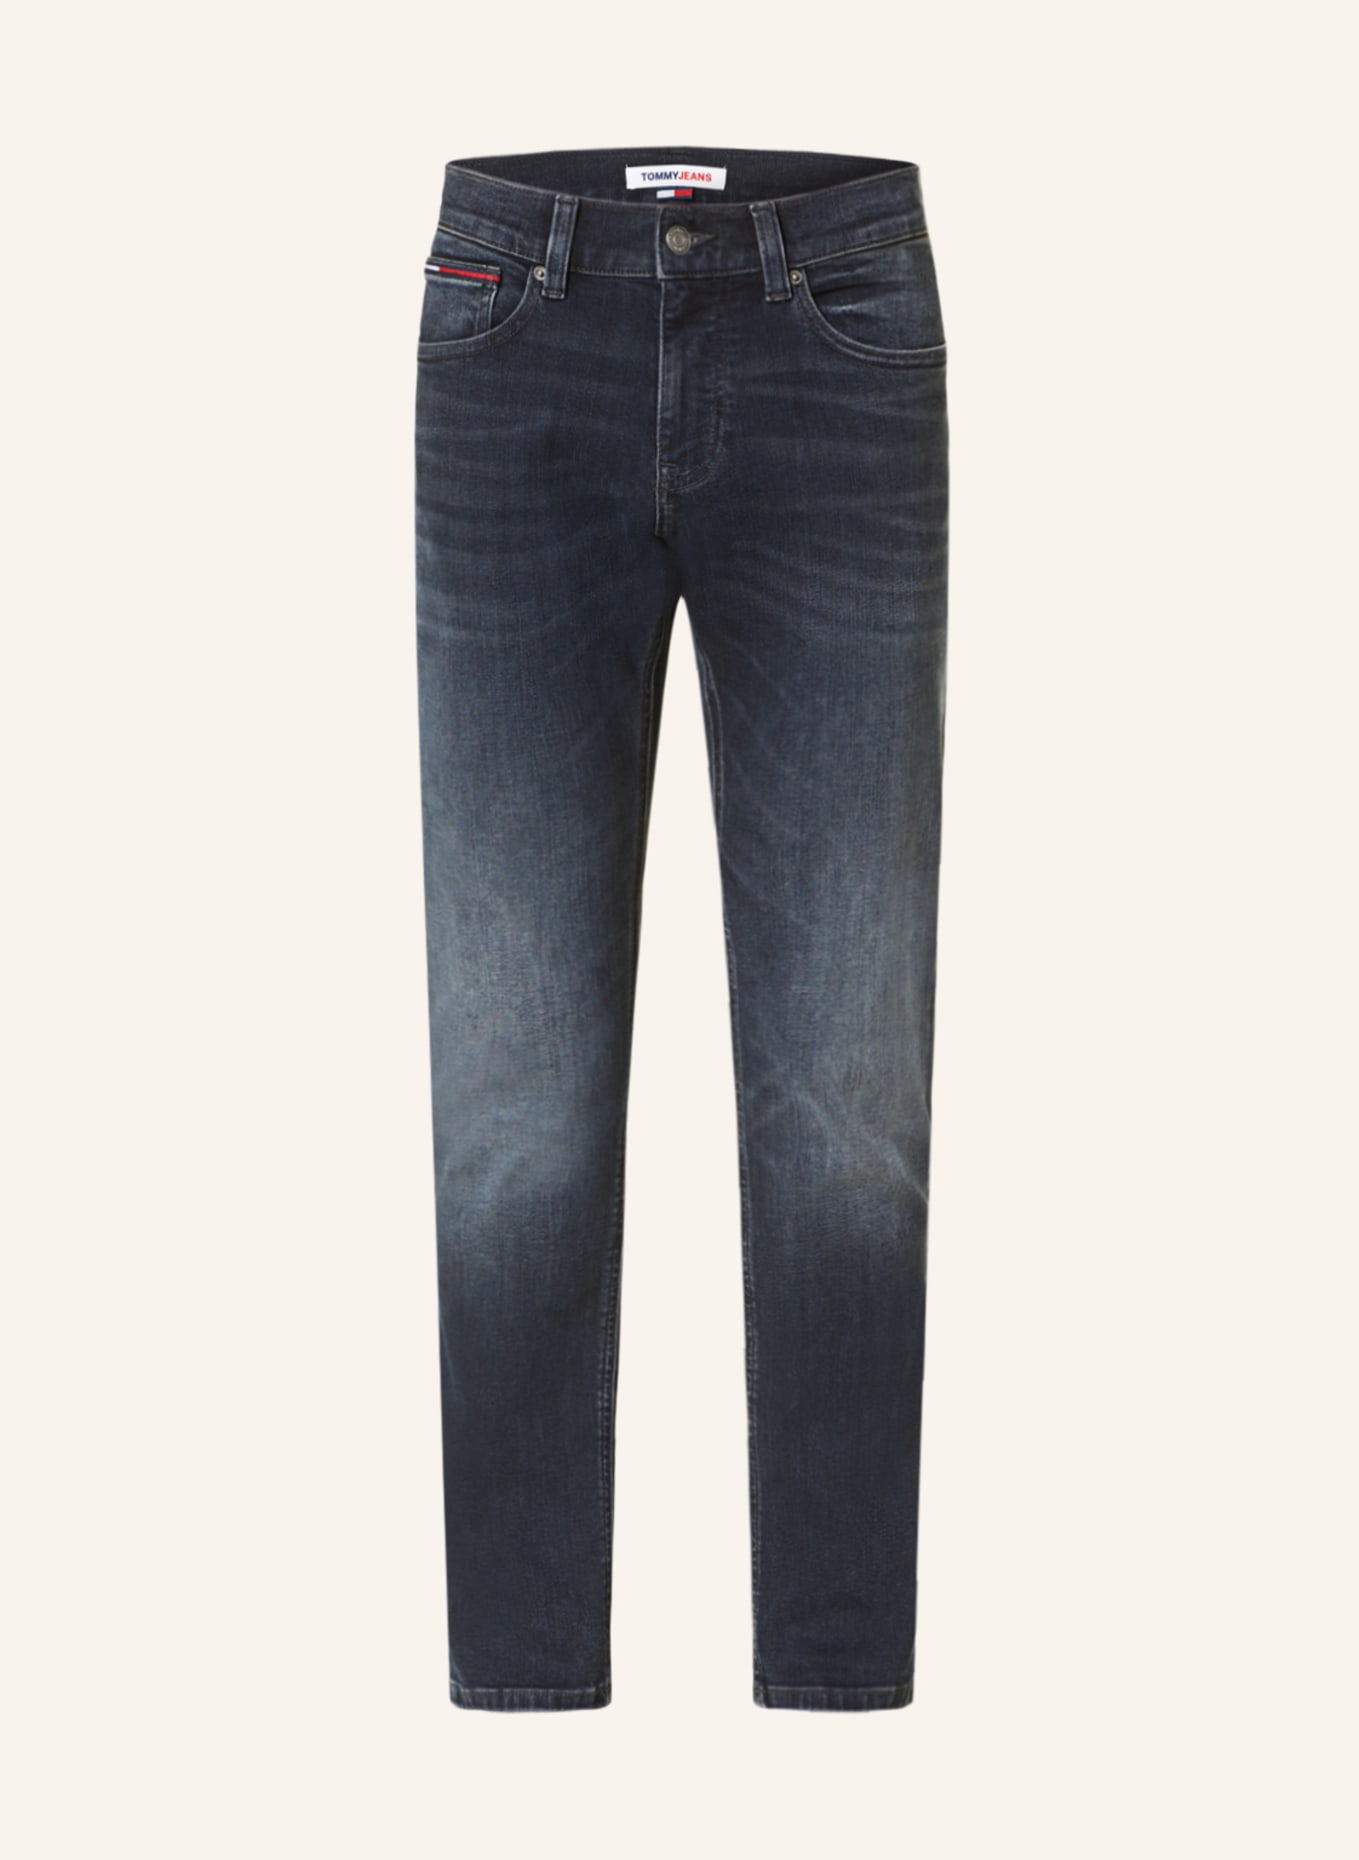 TOMMY JEANS Jeans SCANTON Slim Fit, Farbe: 1BK Denim Dark(Bild null)